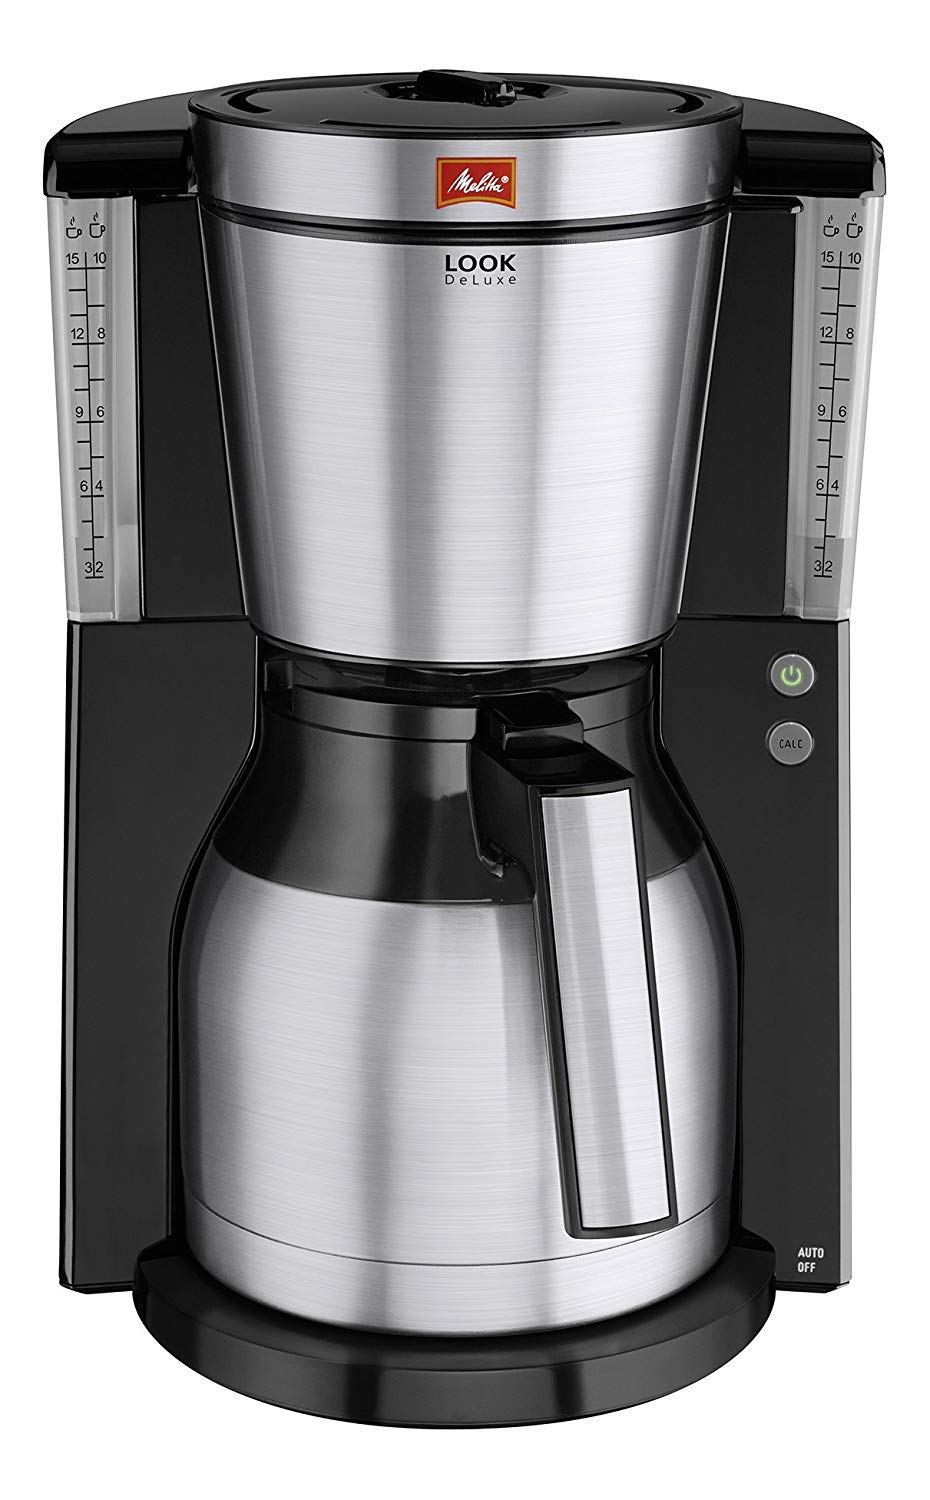 Melitta 1011-14 Look IV Therm Deluxe Filter-Kaffeemaschine, 1.2 cups ,schwarz